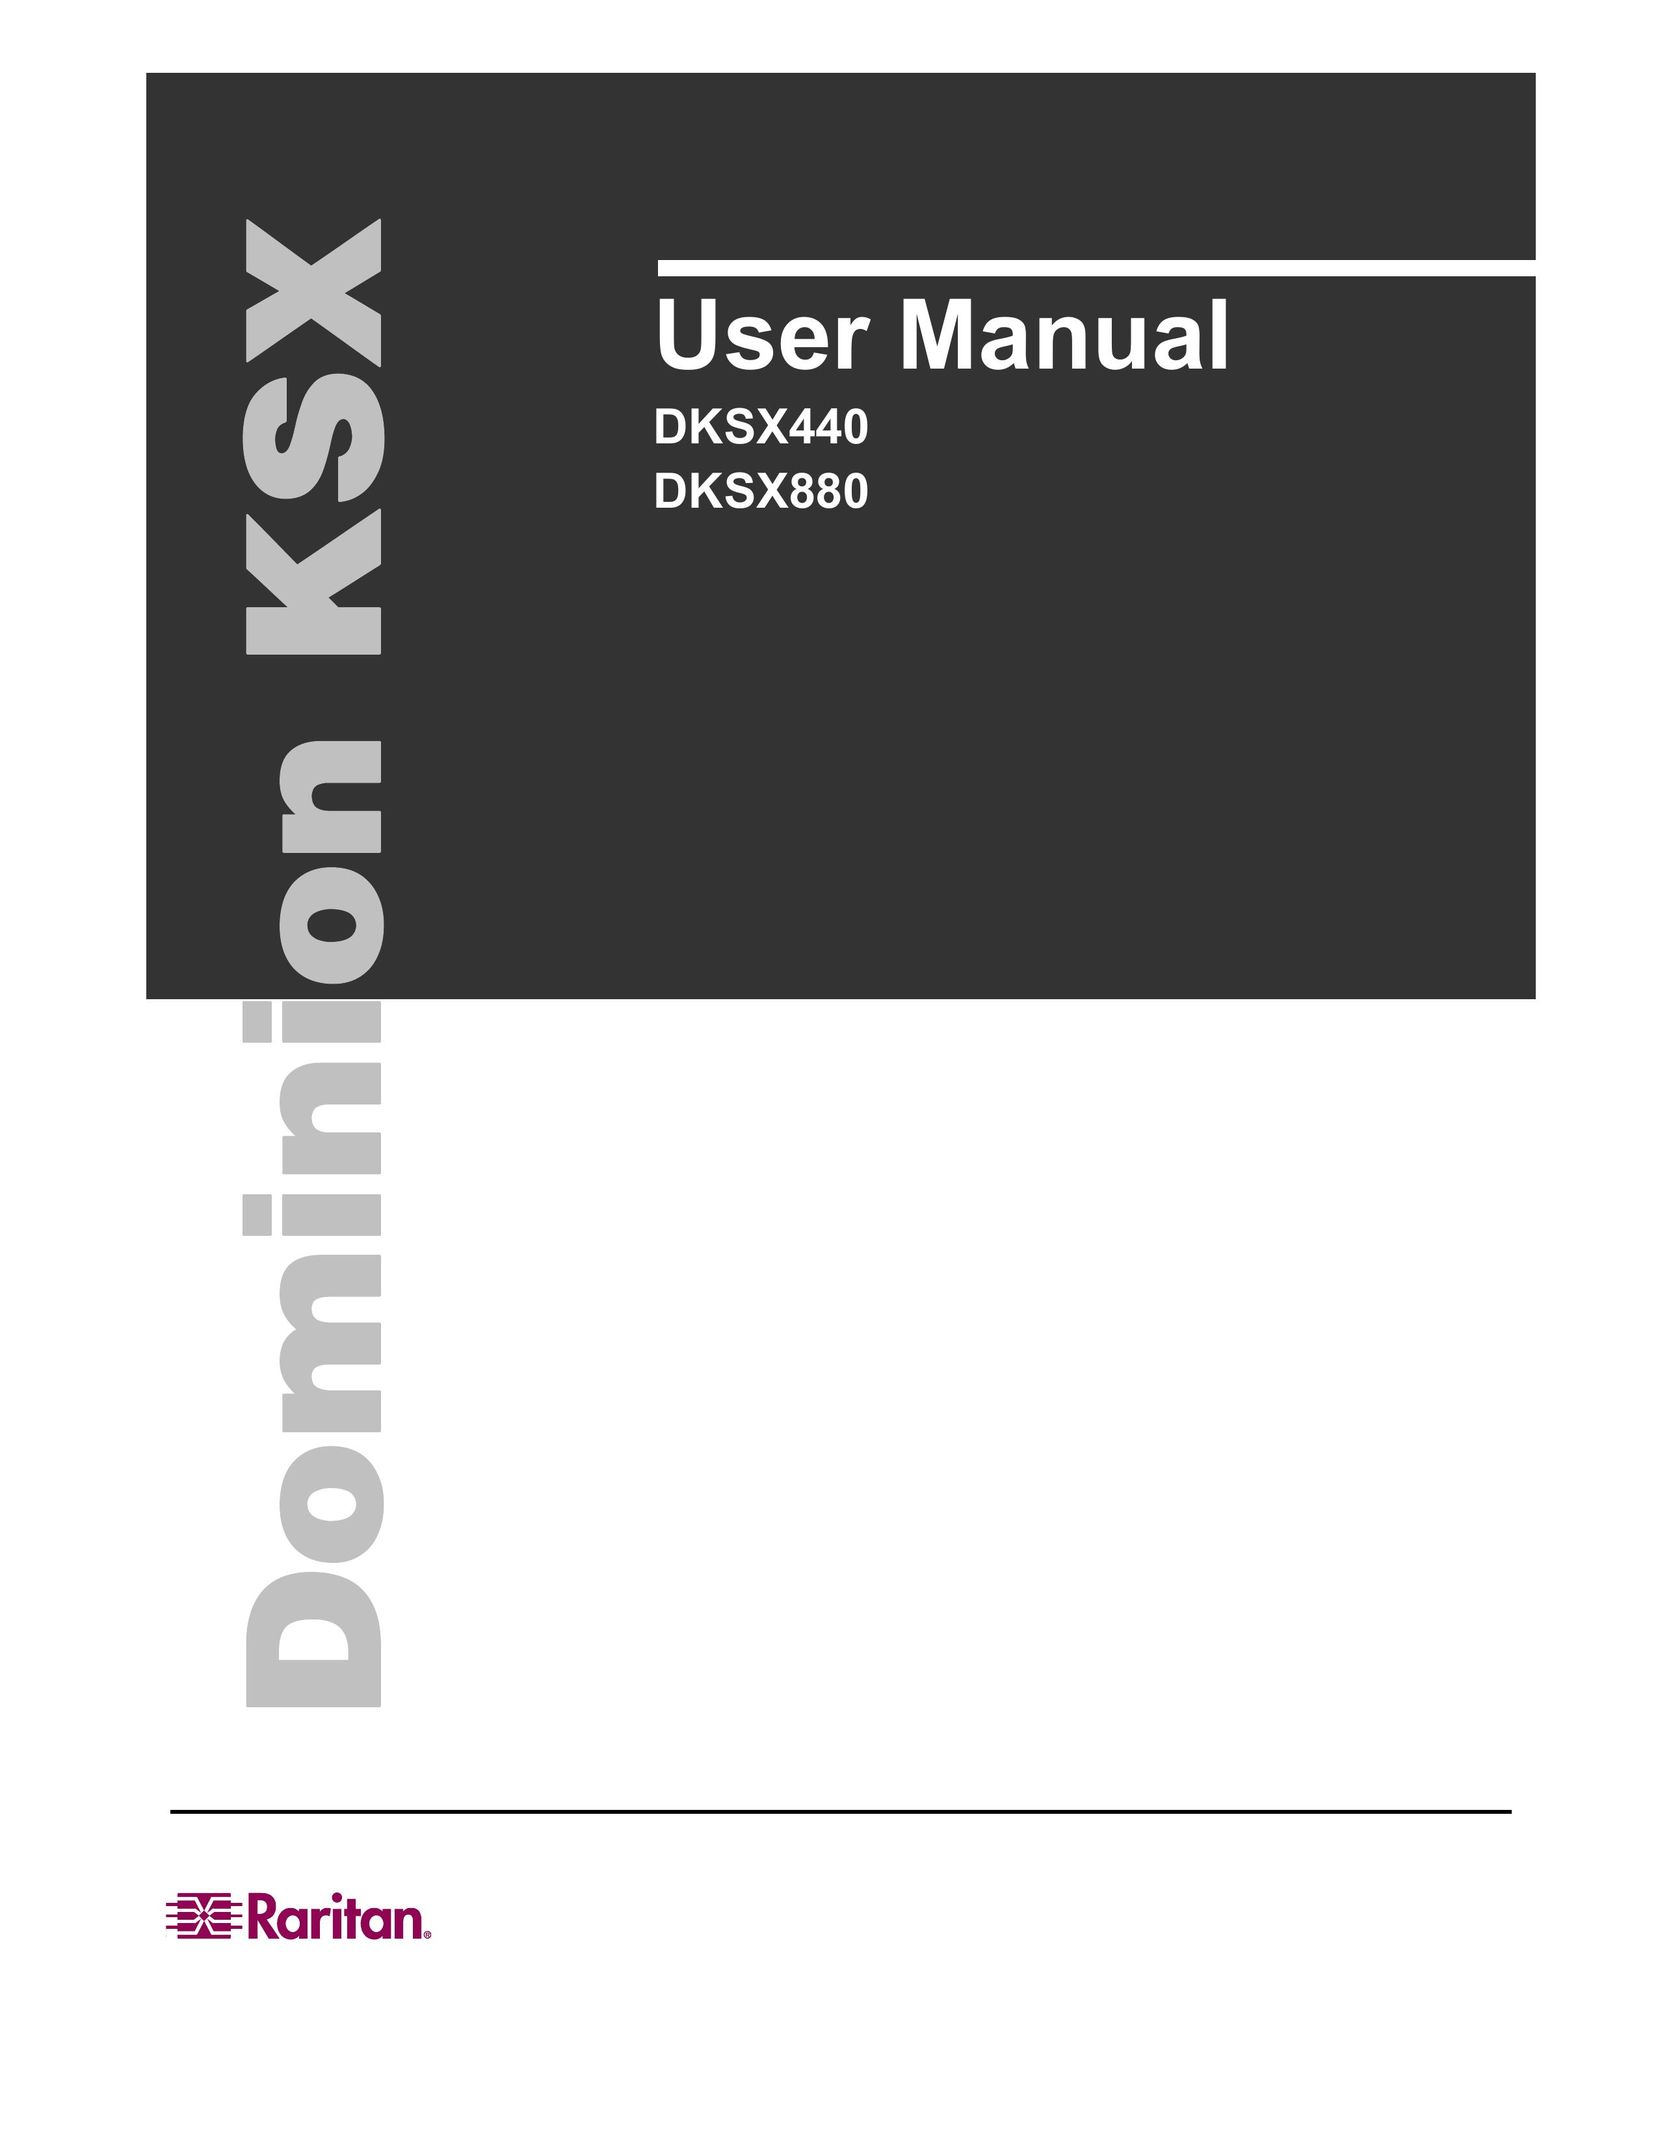 Raritan Computer DKSX440 Network Card User Manual